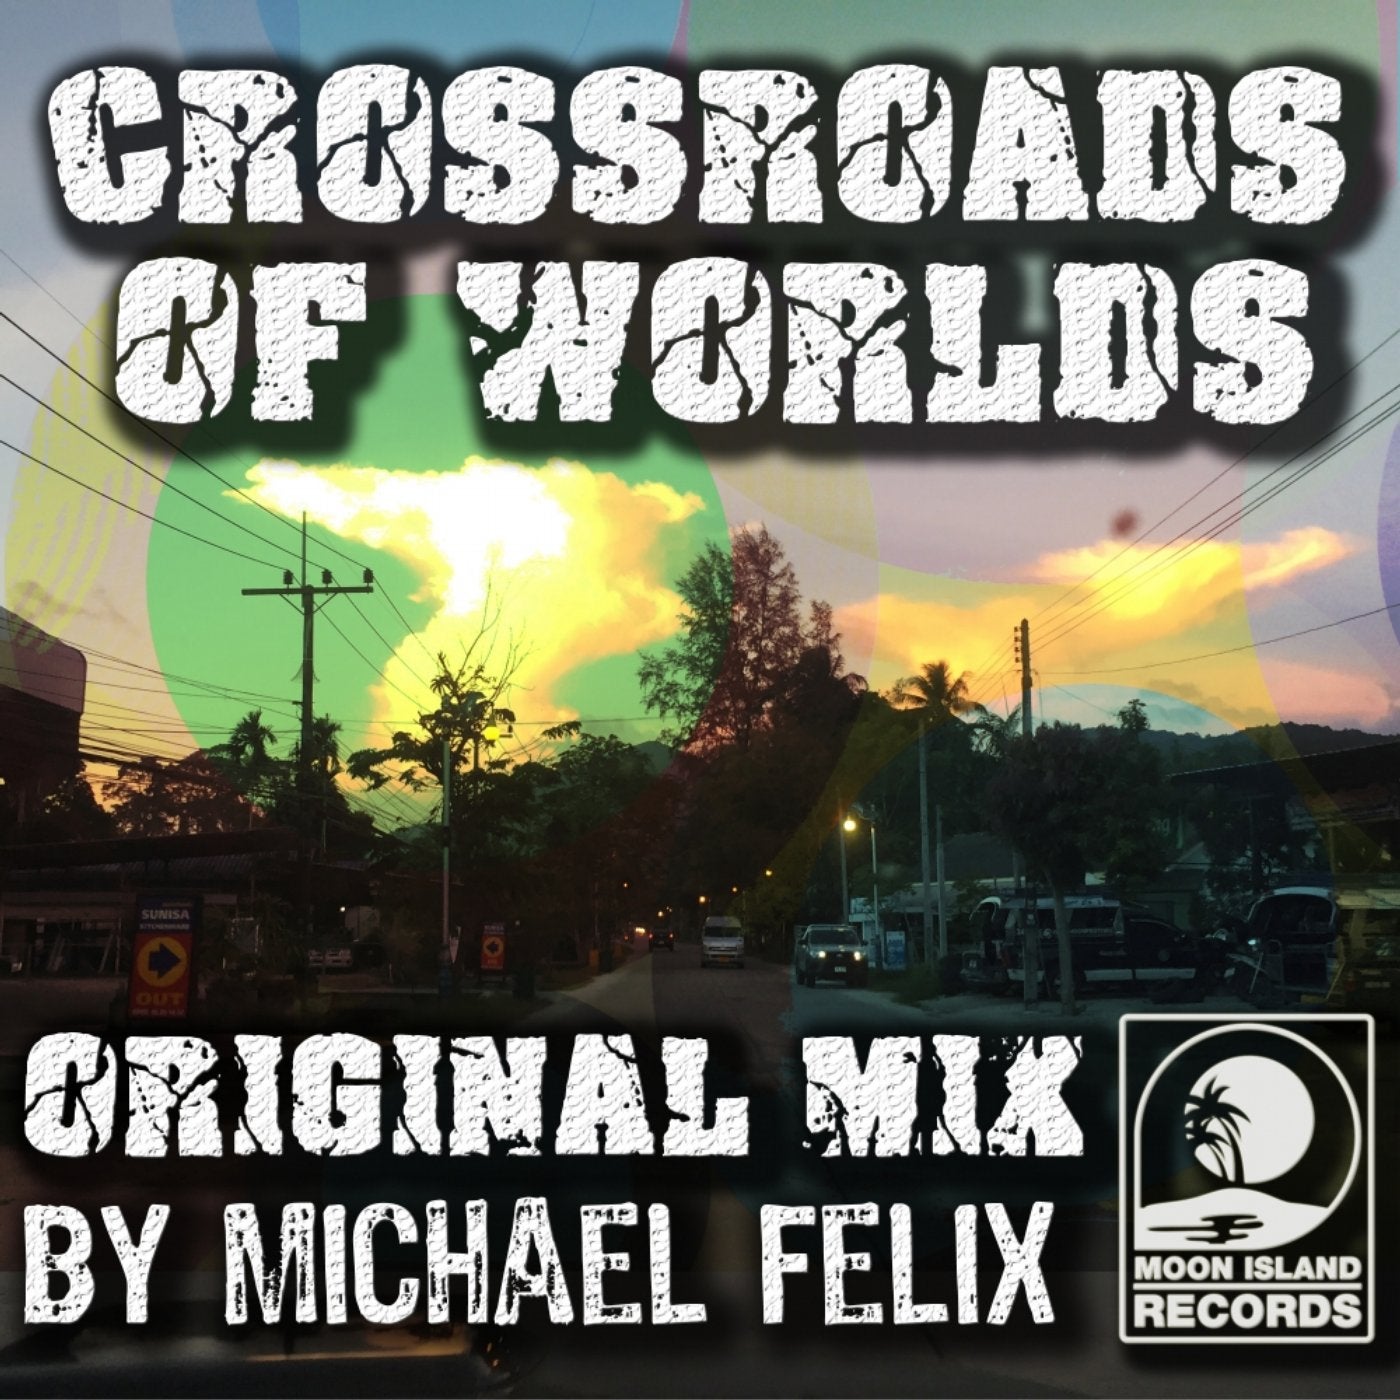 Crossroads of Worlds